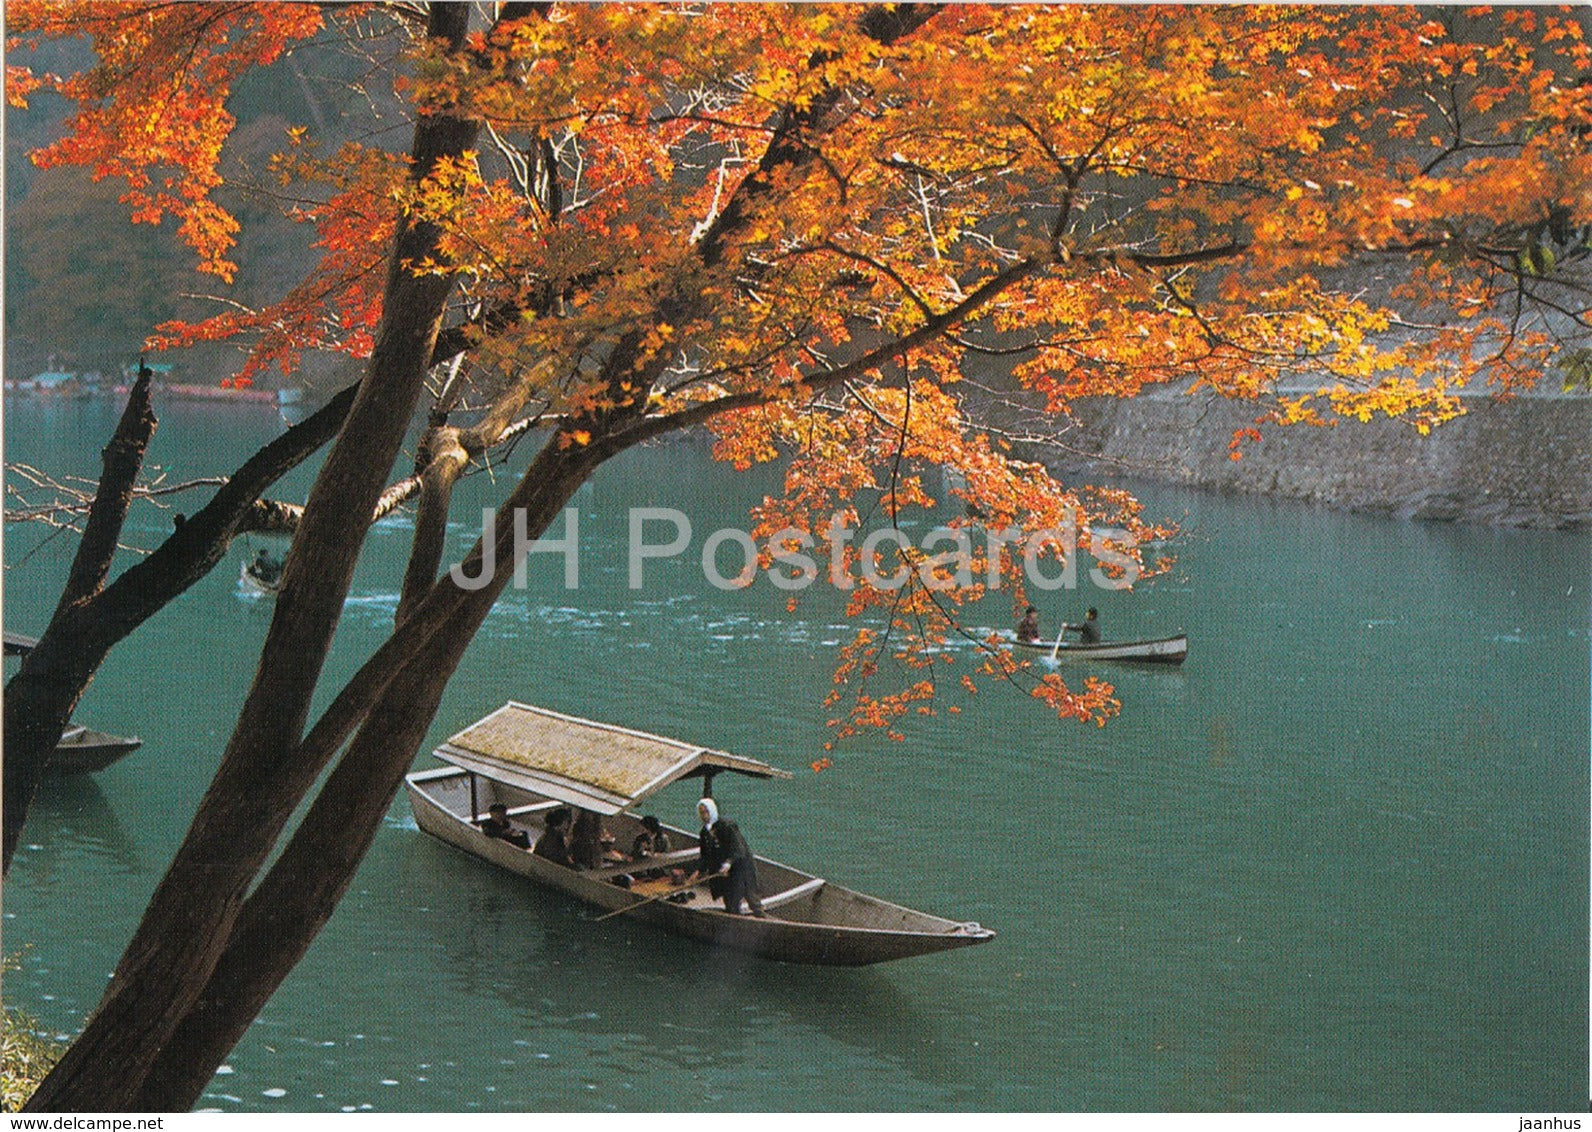 Kyoto - Rankyo valley in Autumn - boat - Japan - unused - JH Postcards